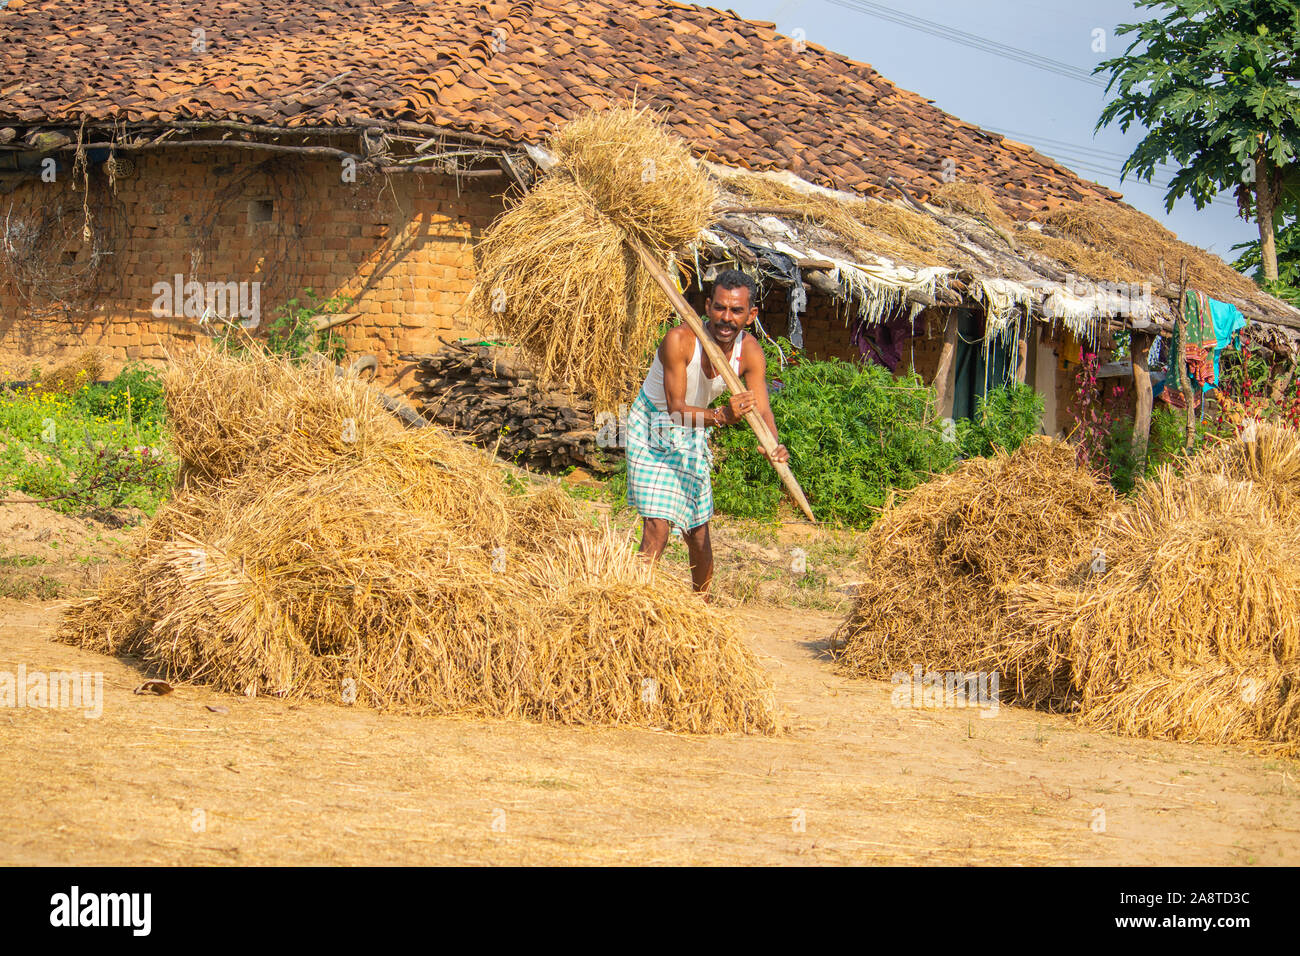 SIJHORA-INDIA,NOVEMBER-10,2019: Farmer is carrying rice bundles in the field in Madhya pradesh. Stock Photo